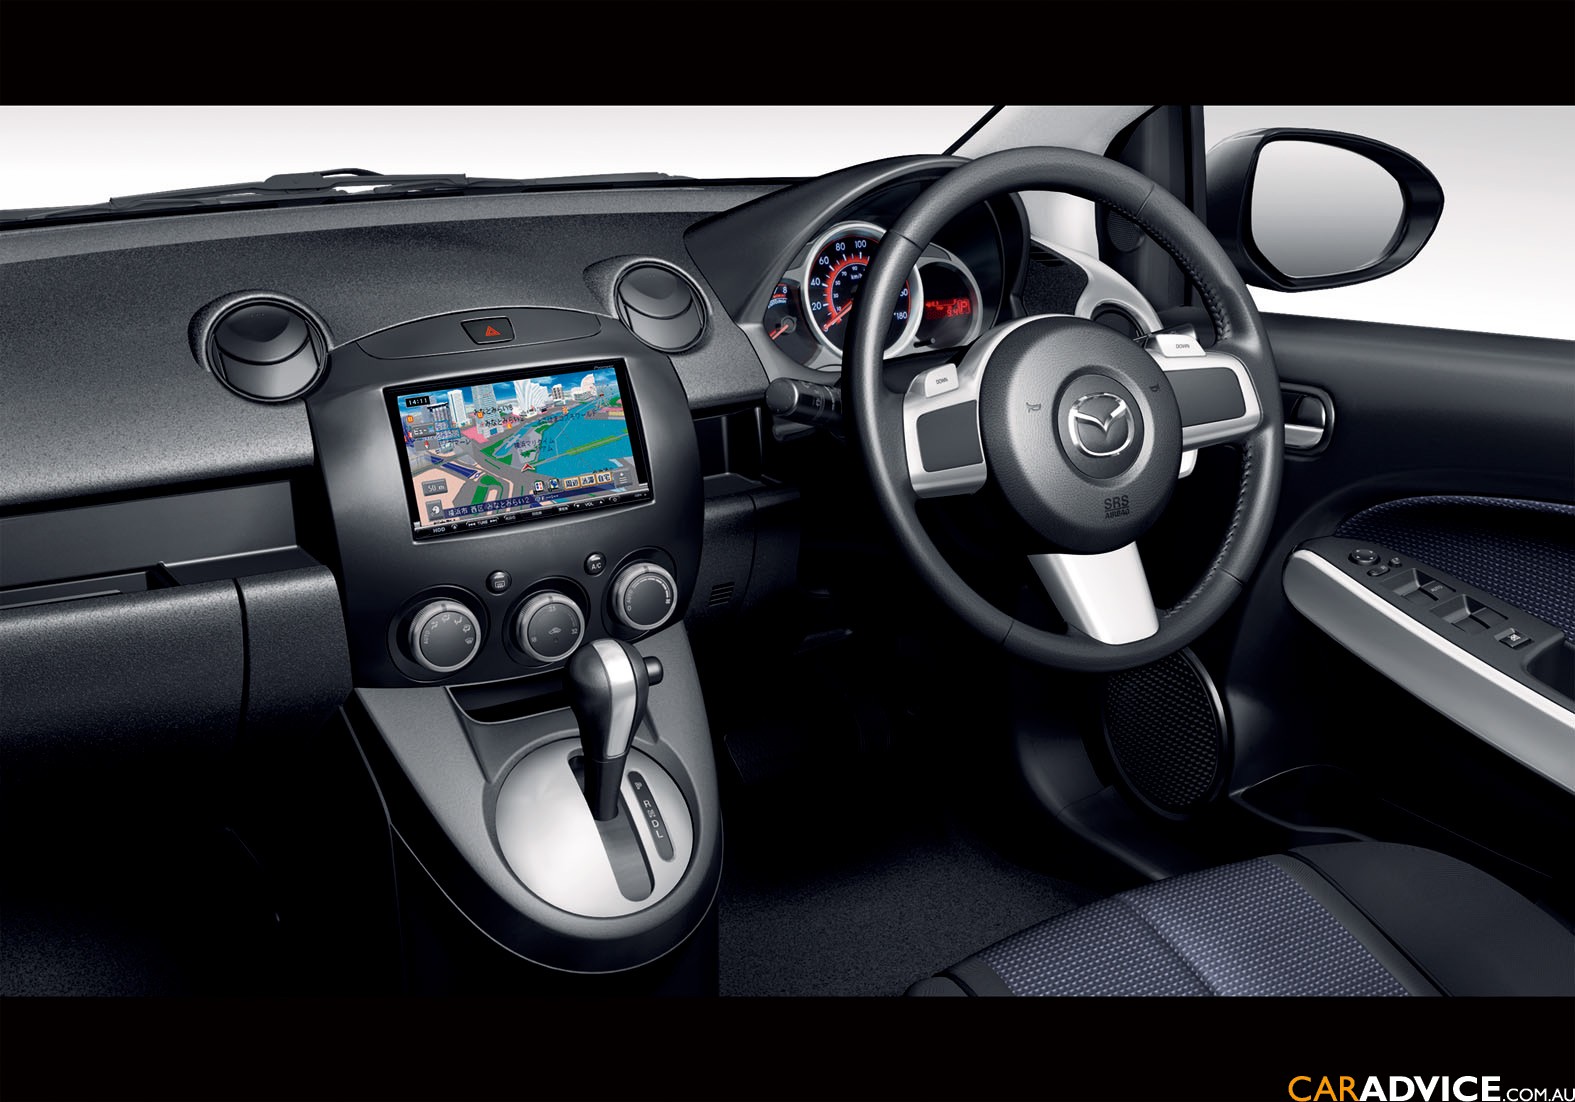 2009 Mazda 2 upgrade - photos | CarAdvice